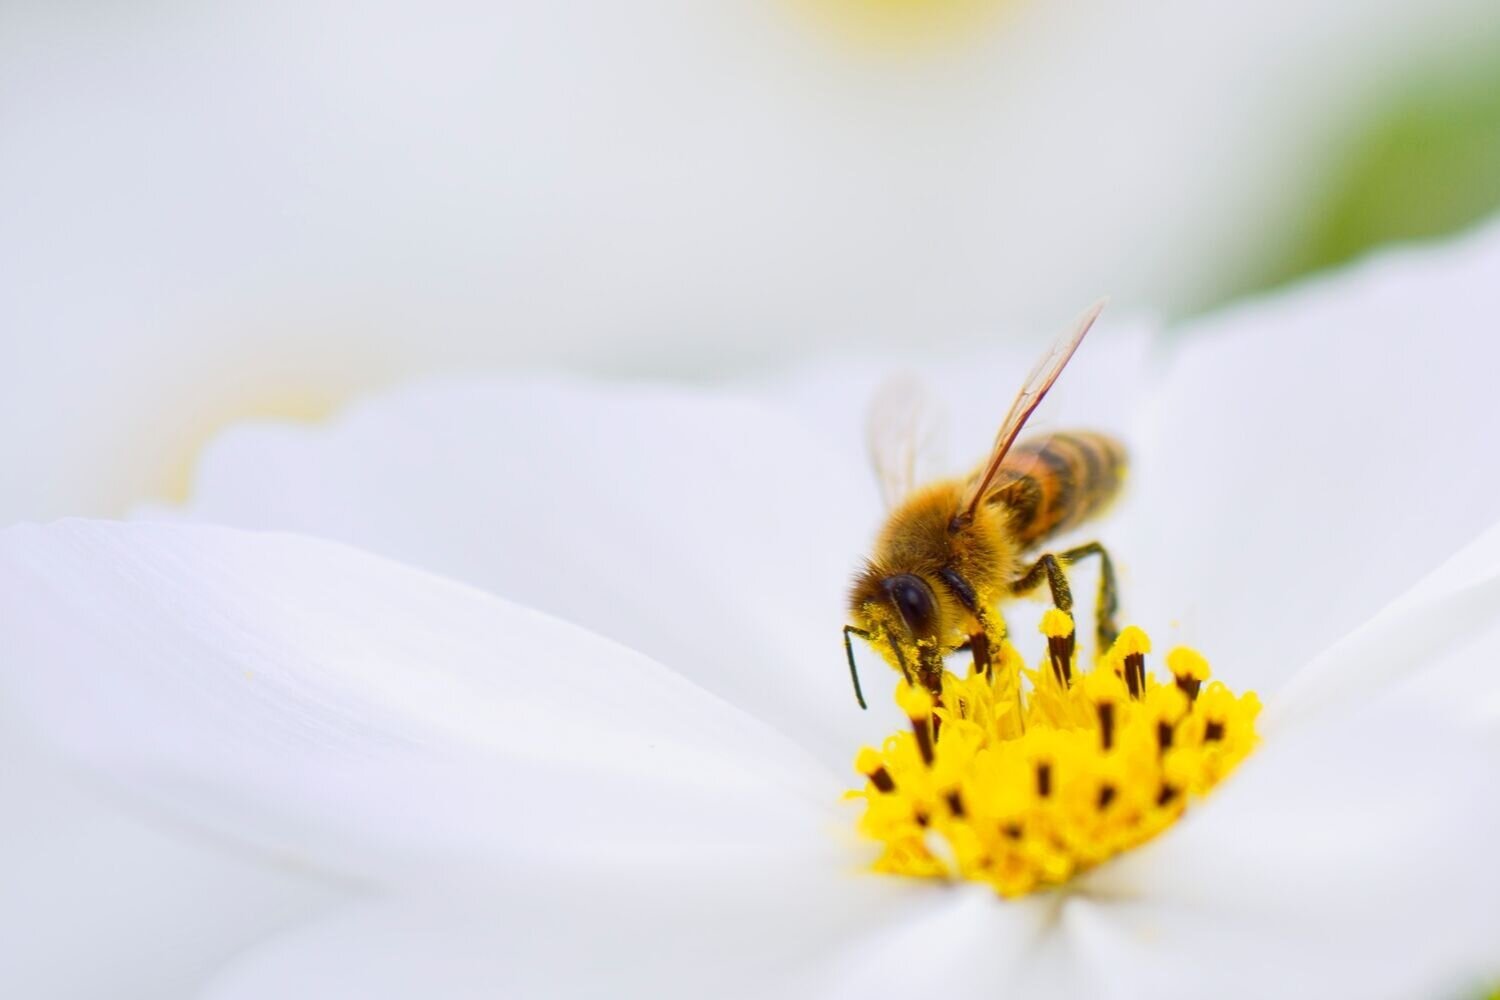  Bee   Generous    Charitable Contributions  